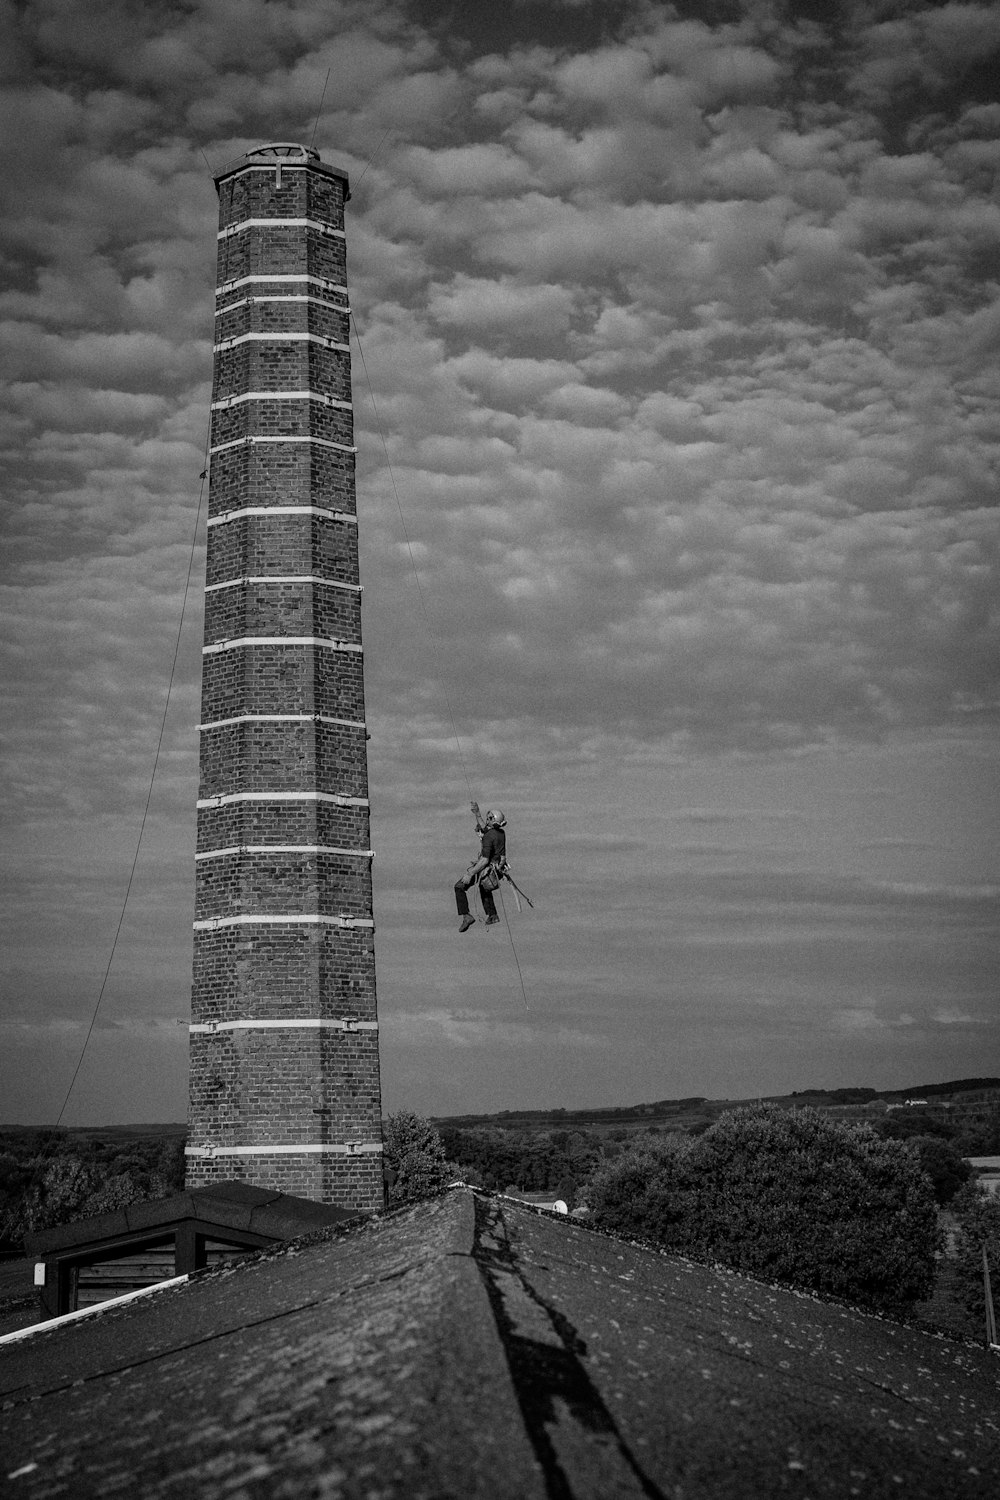 Una persona saltando de una torre alta